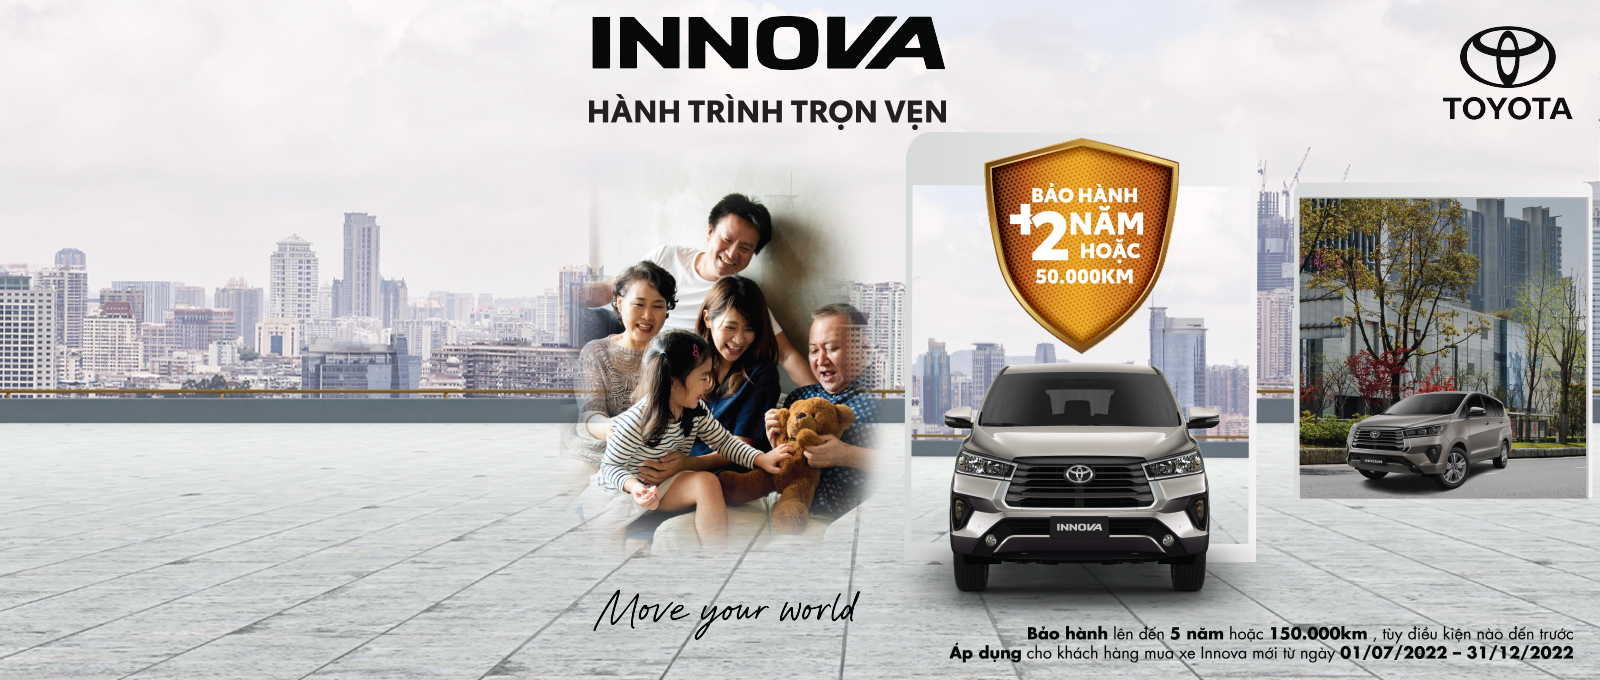 cover INNOVA 2.0V